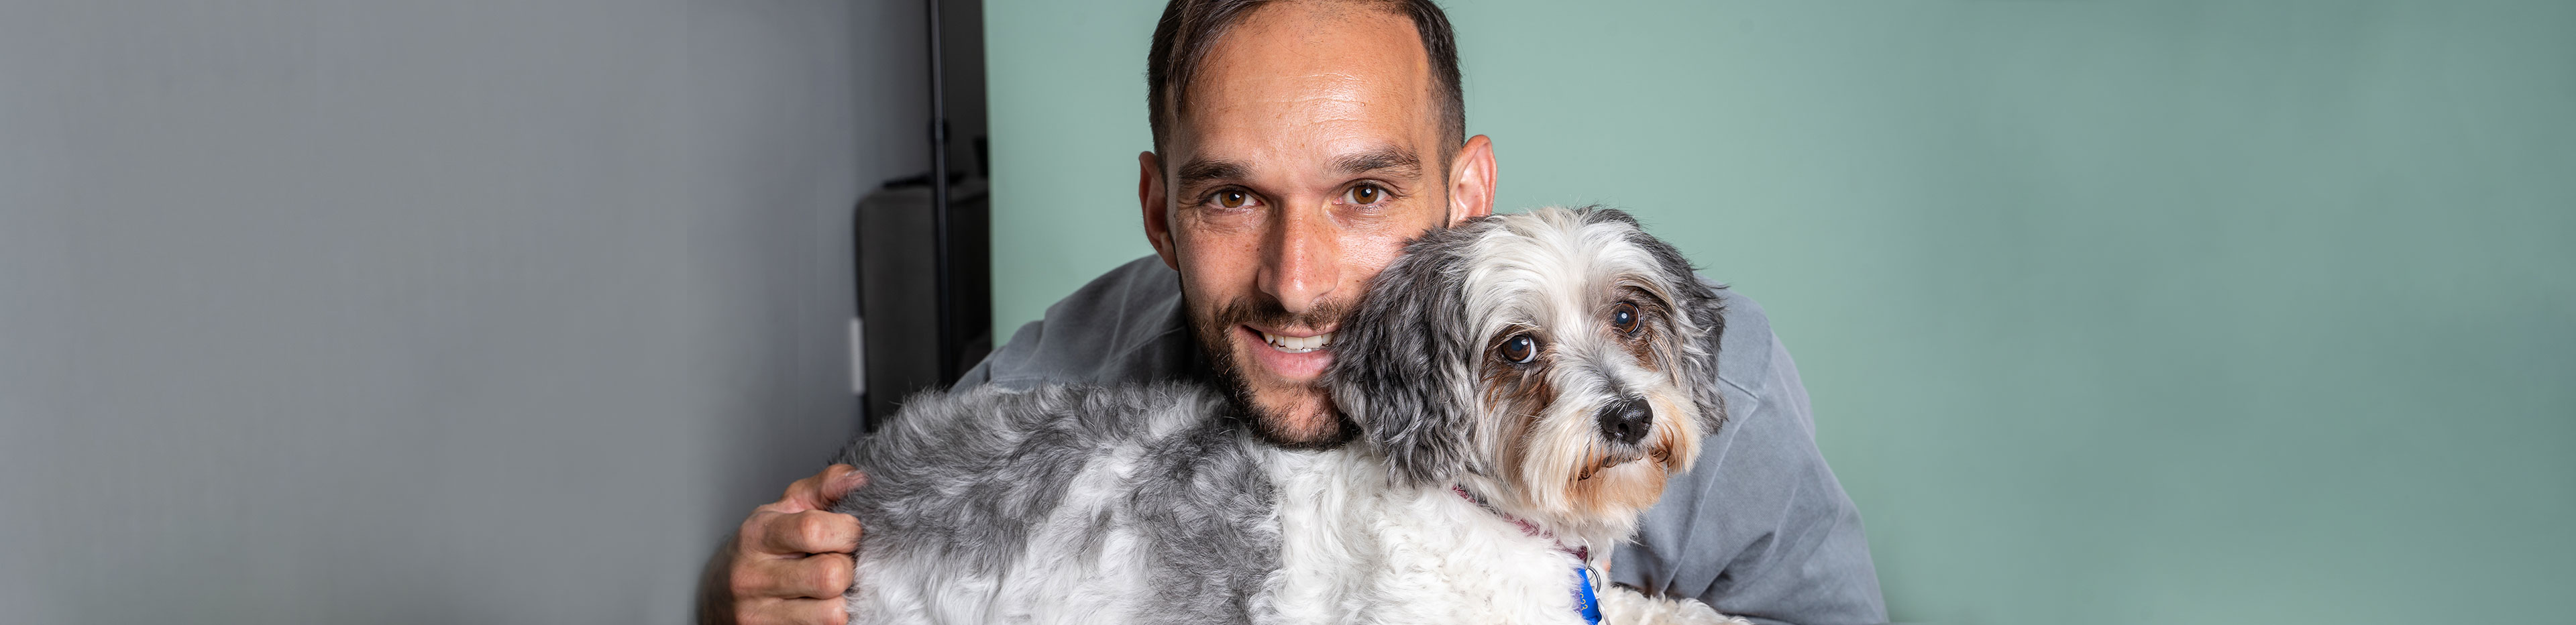 RSPCA Qld Ambassador Jack Hingert cuddles into his small rescue dog Chloe